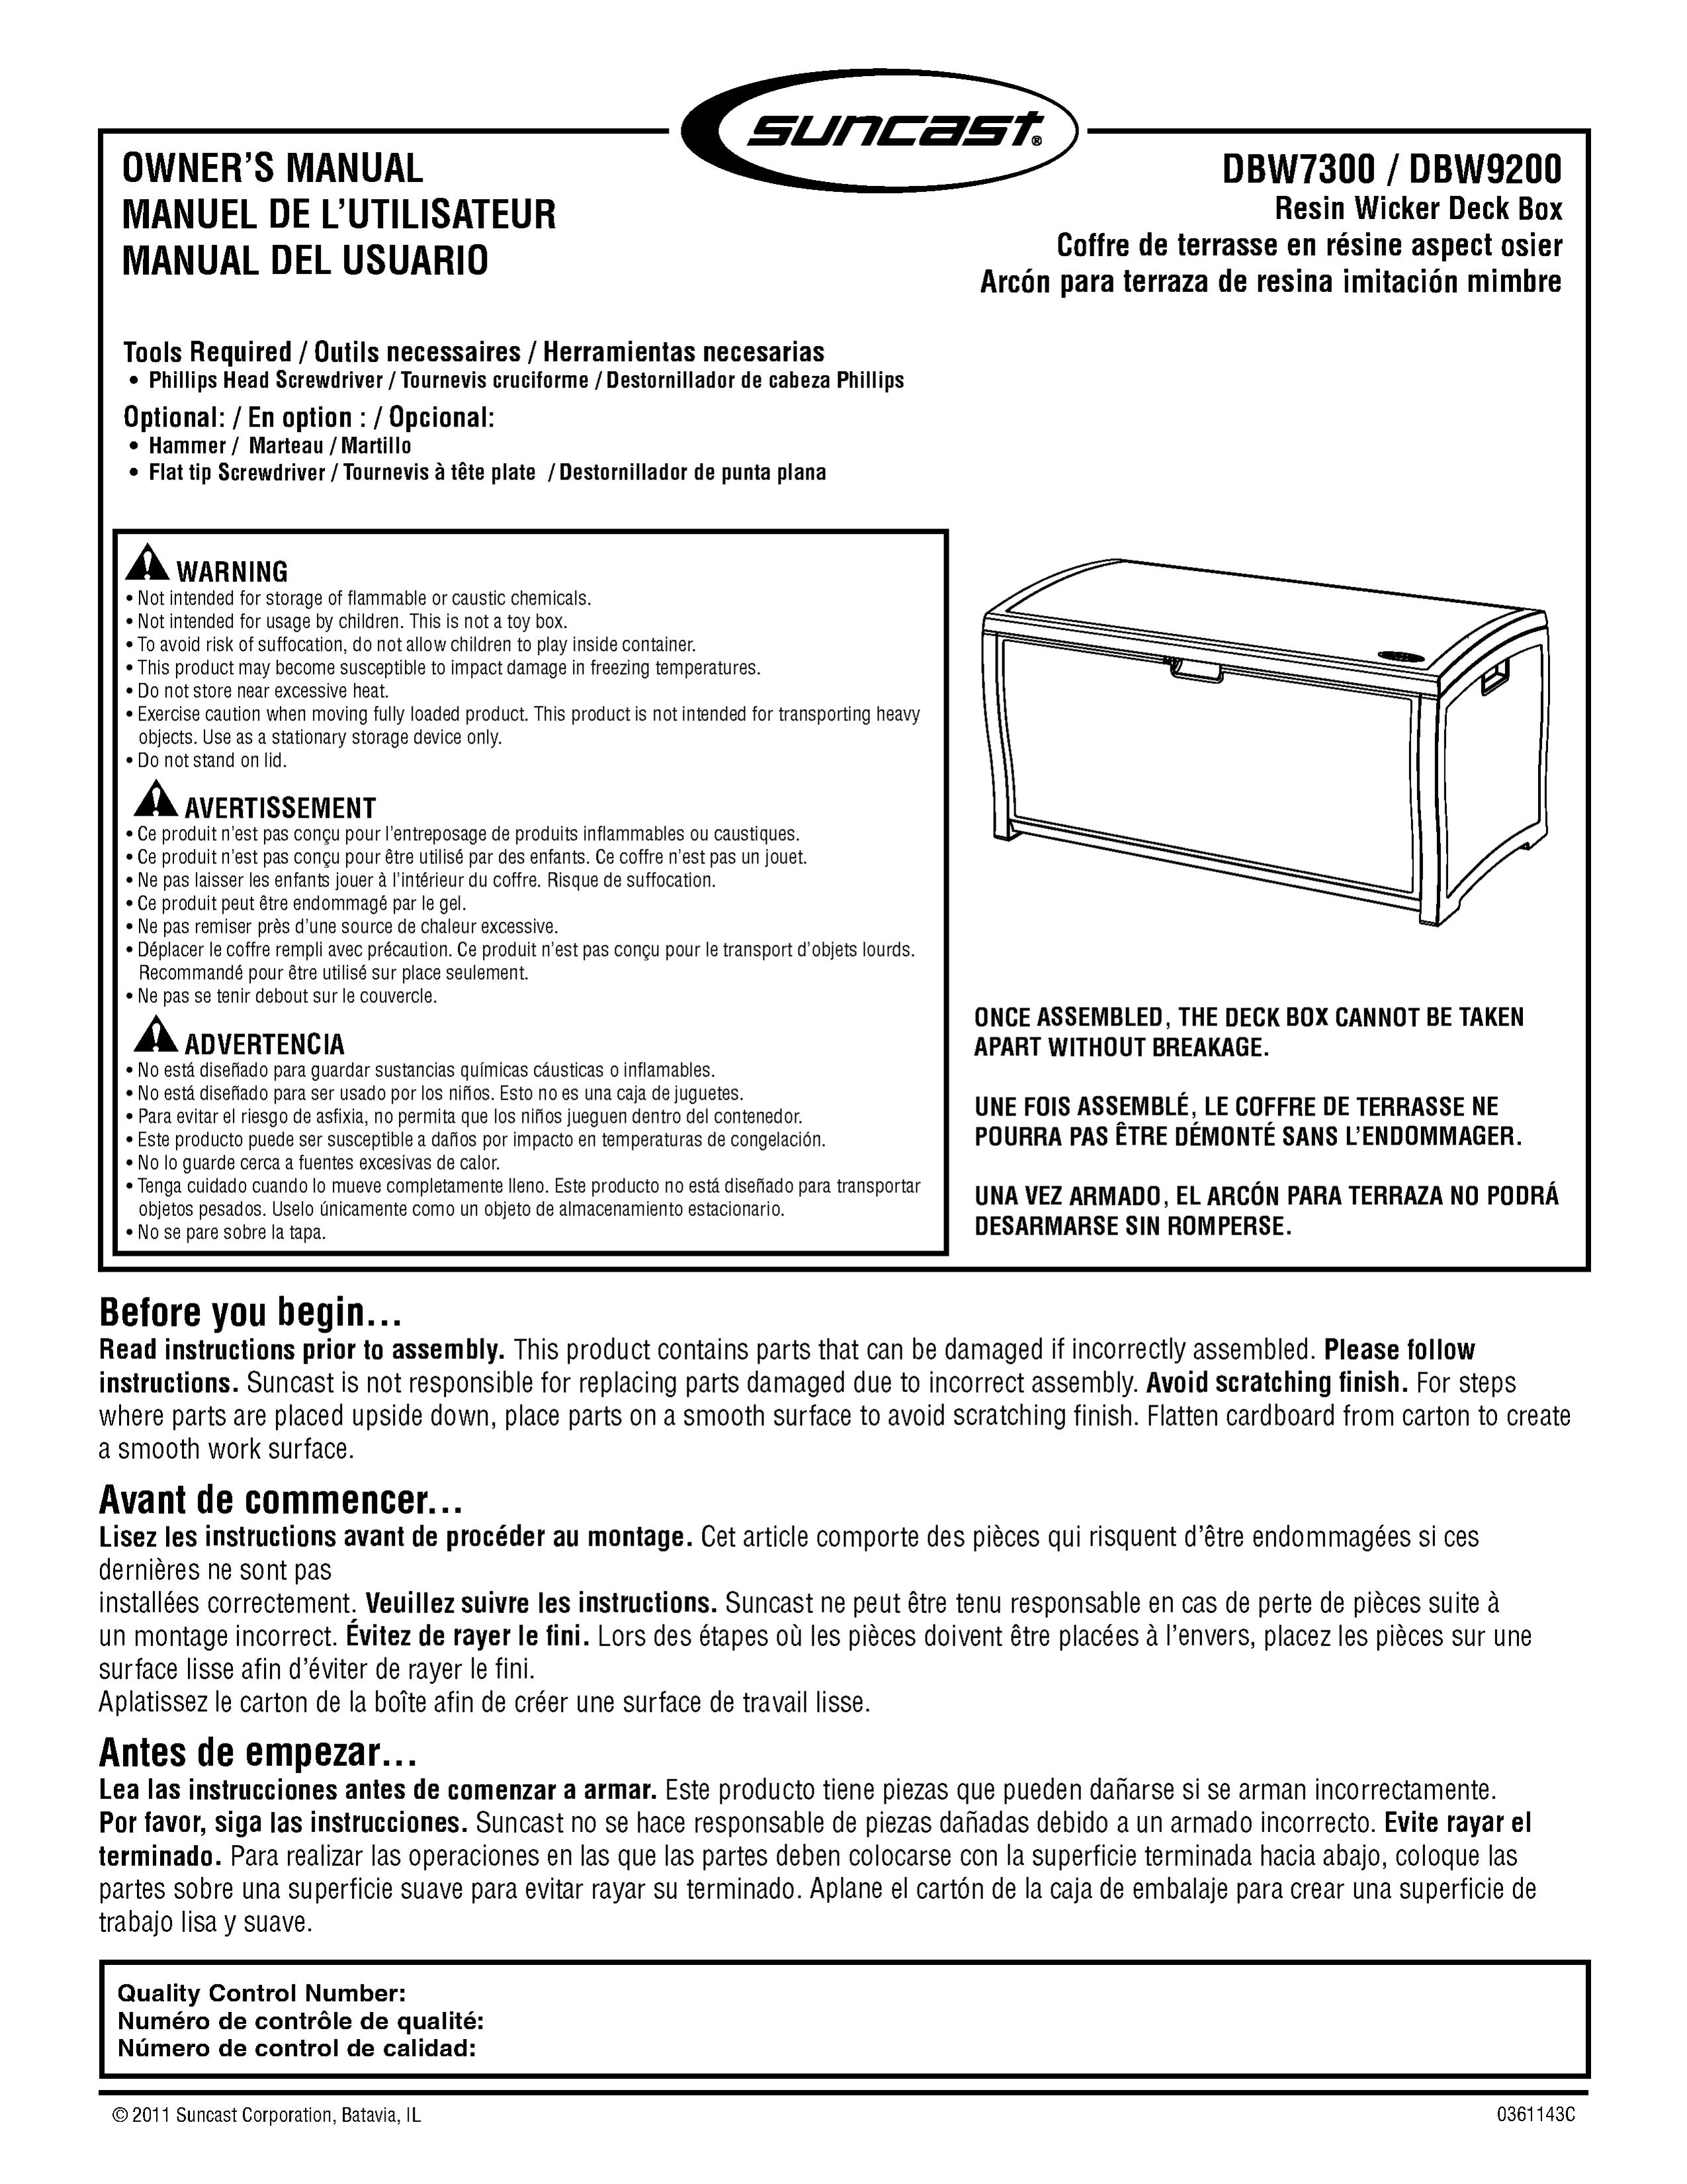 Suncast DBW7300 Outdoor Storage User Manual